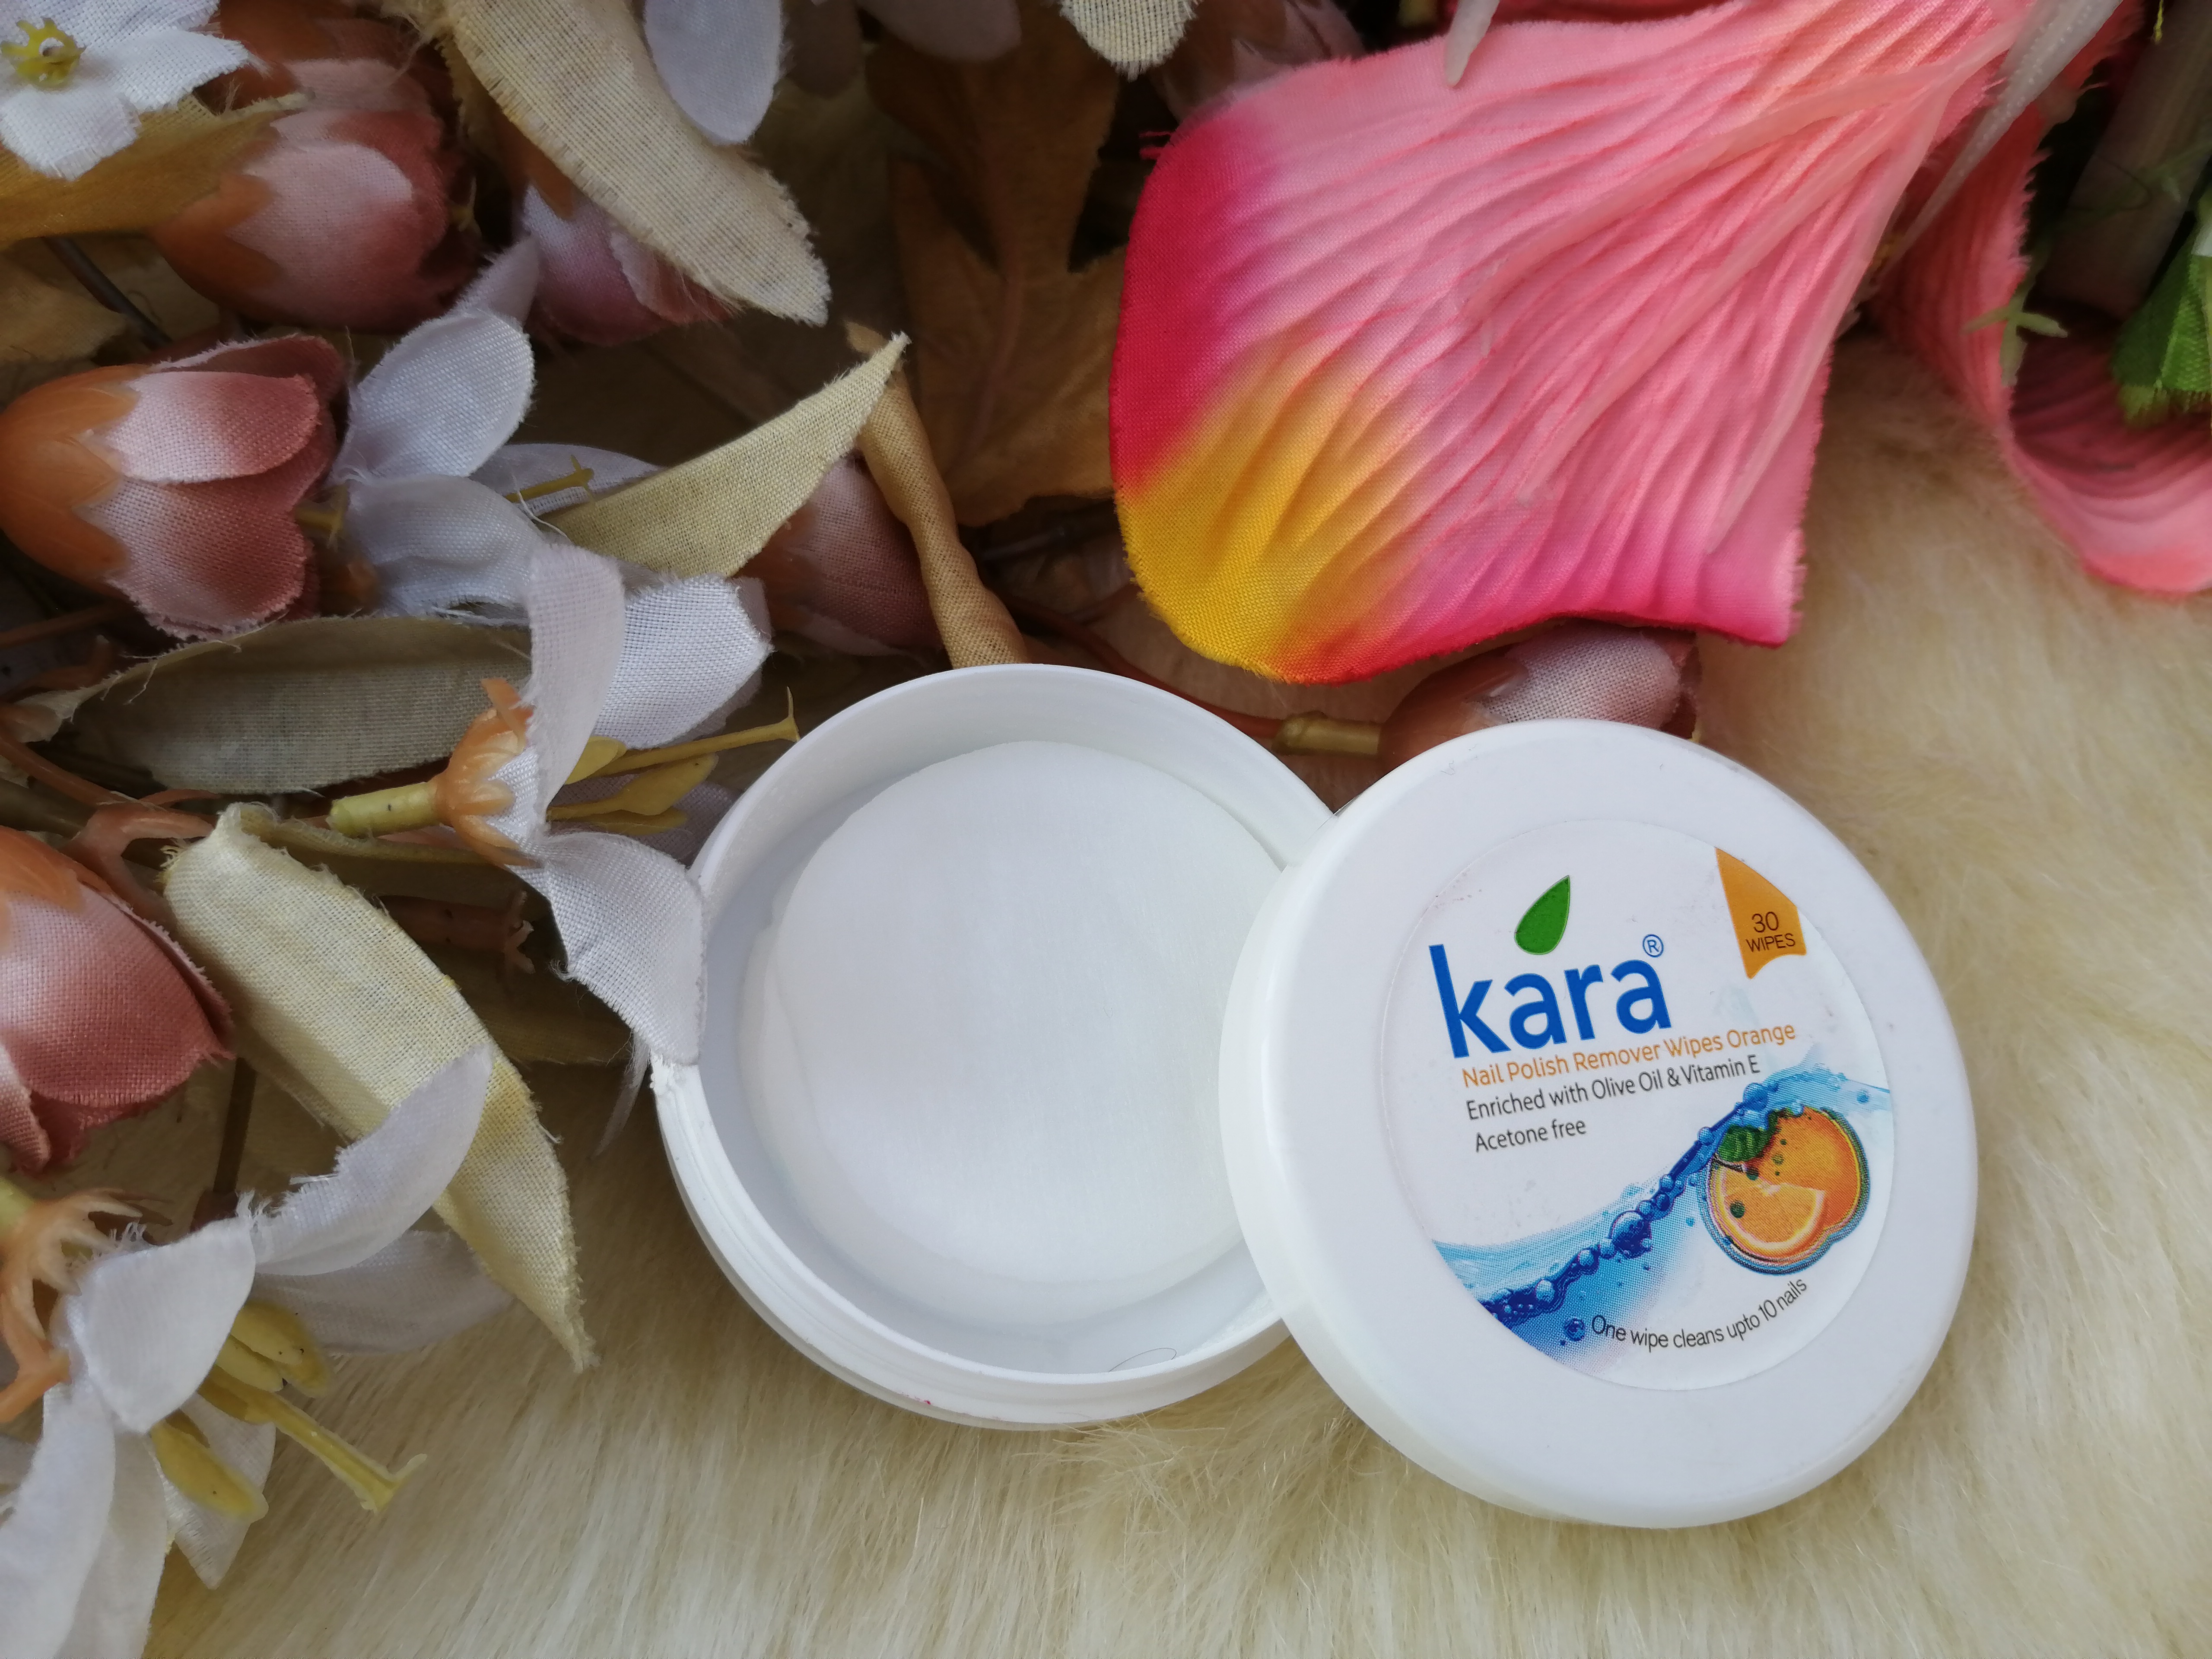 Kara Nail Polish Remover Wipes Orange| Review